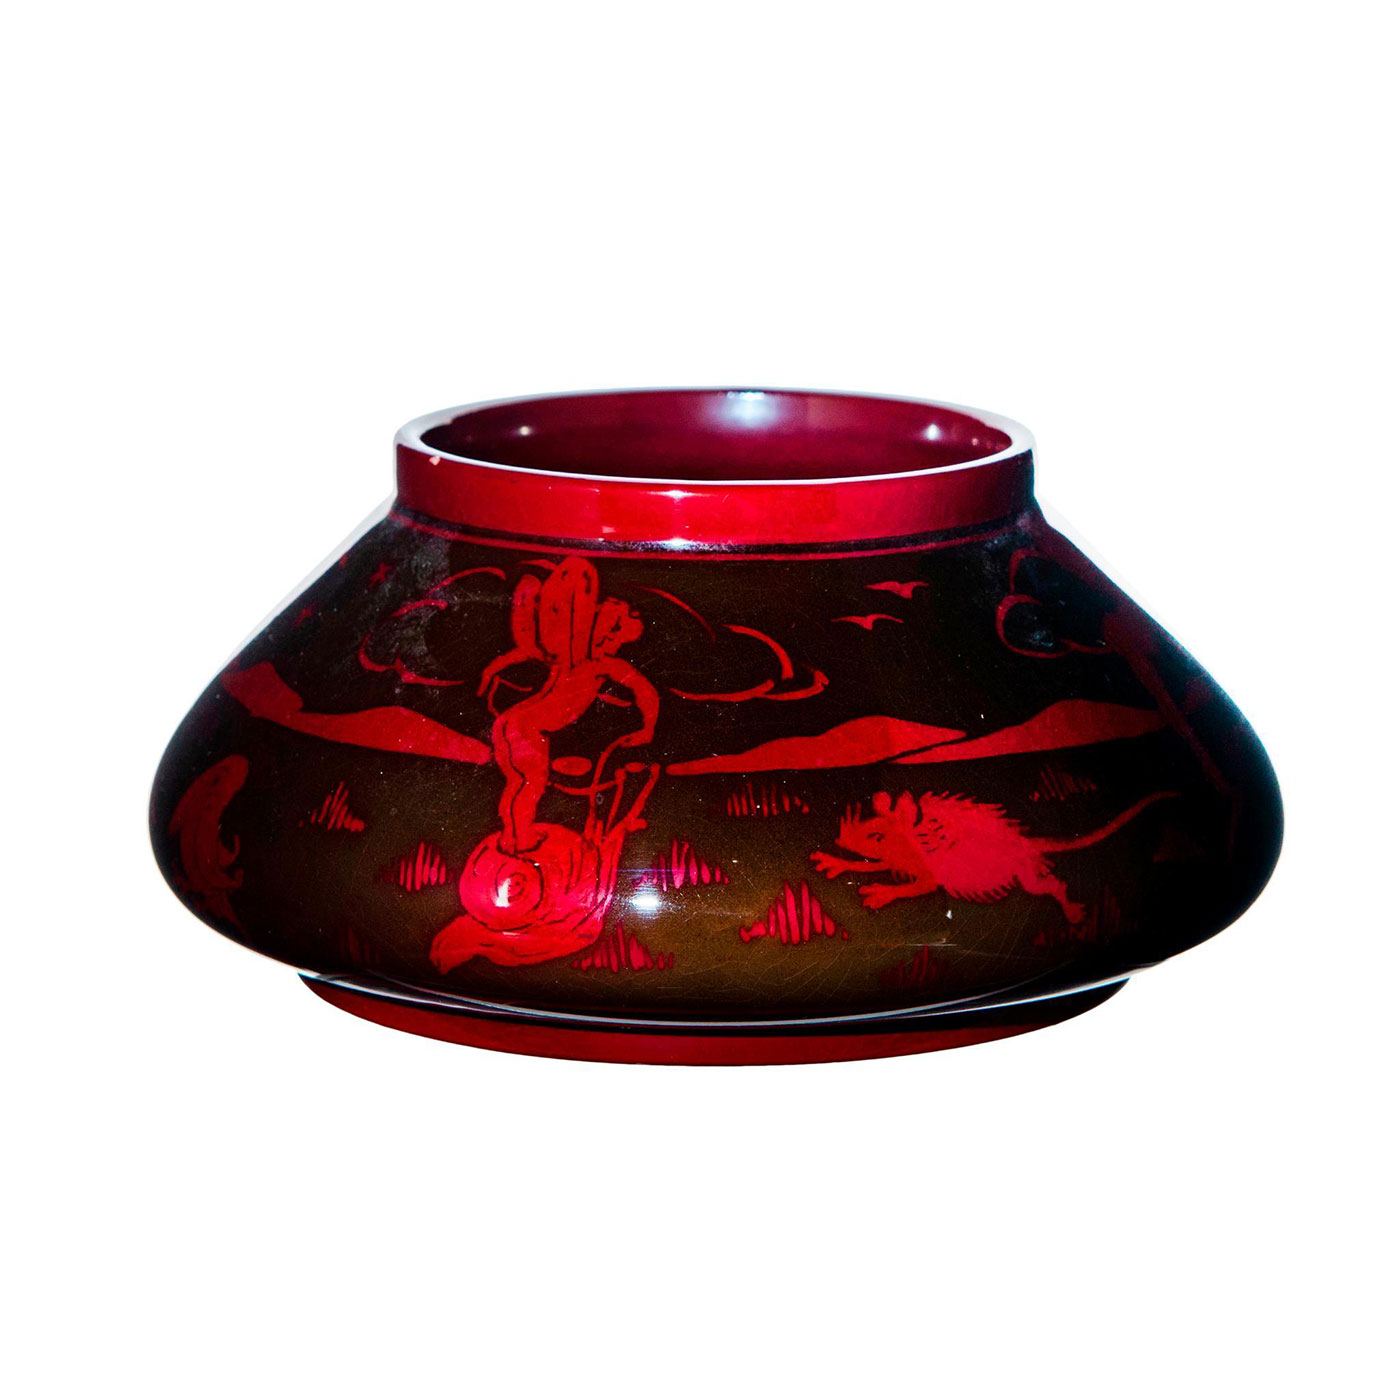 Bernard Moore Art Pottery Flambe Vase - Image 3 of 4